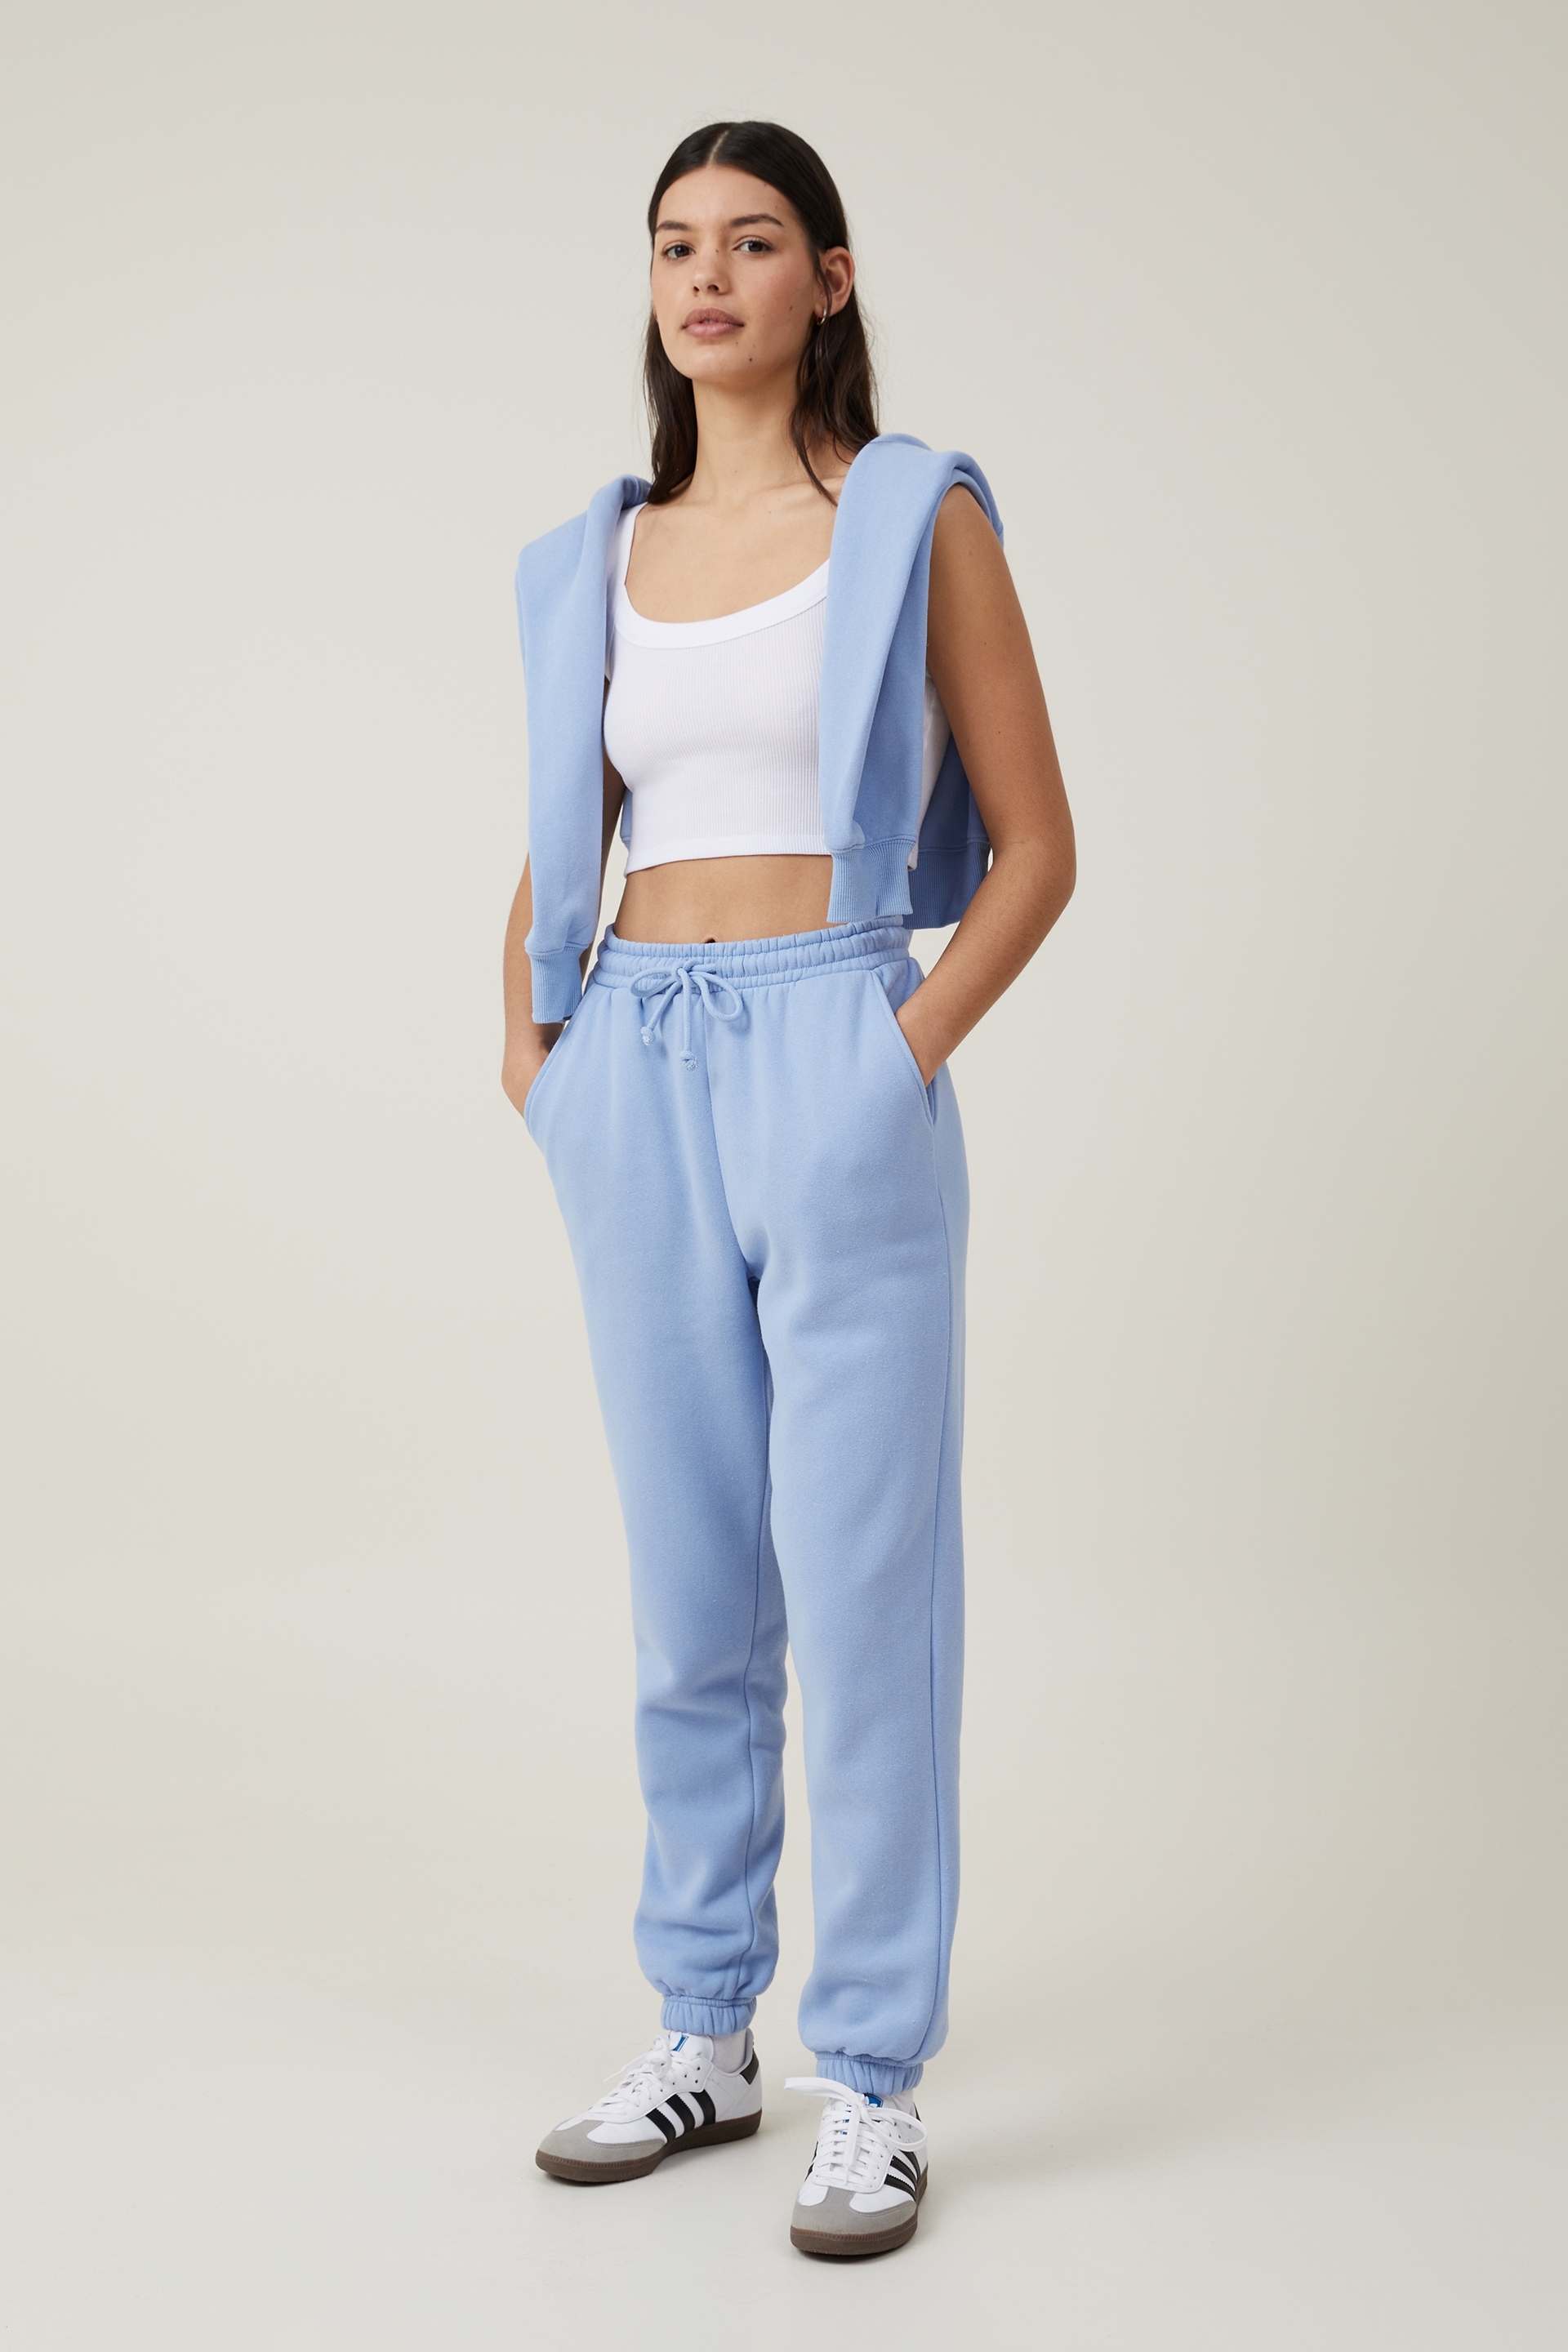 Cotton On Women - Classic Fleece Sweatpant - Coastal blue